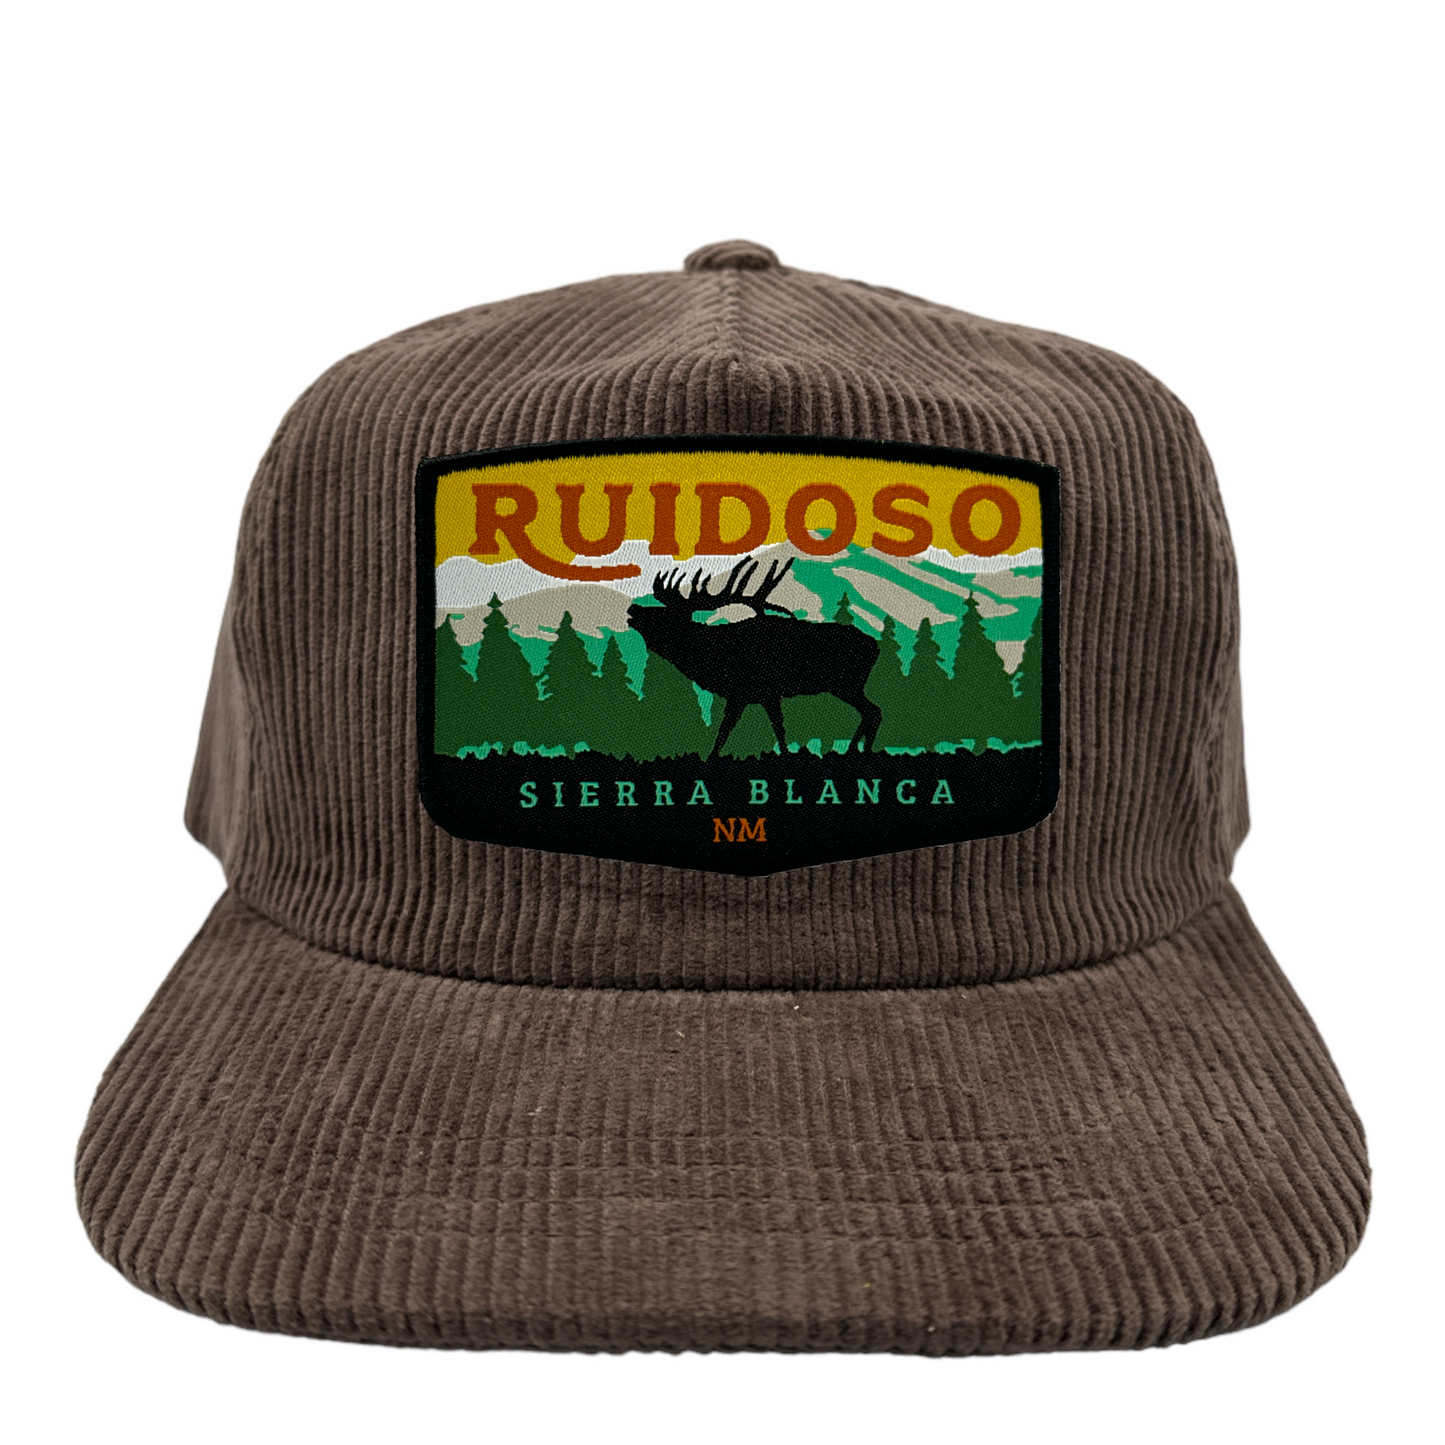 Ruidoso, NM - Corduroy Snapback